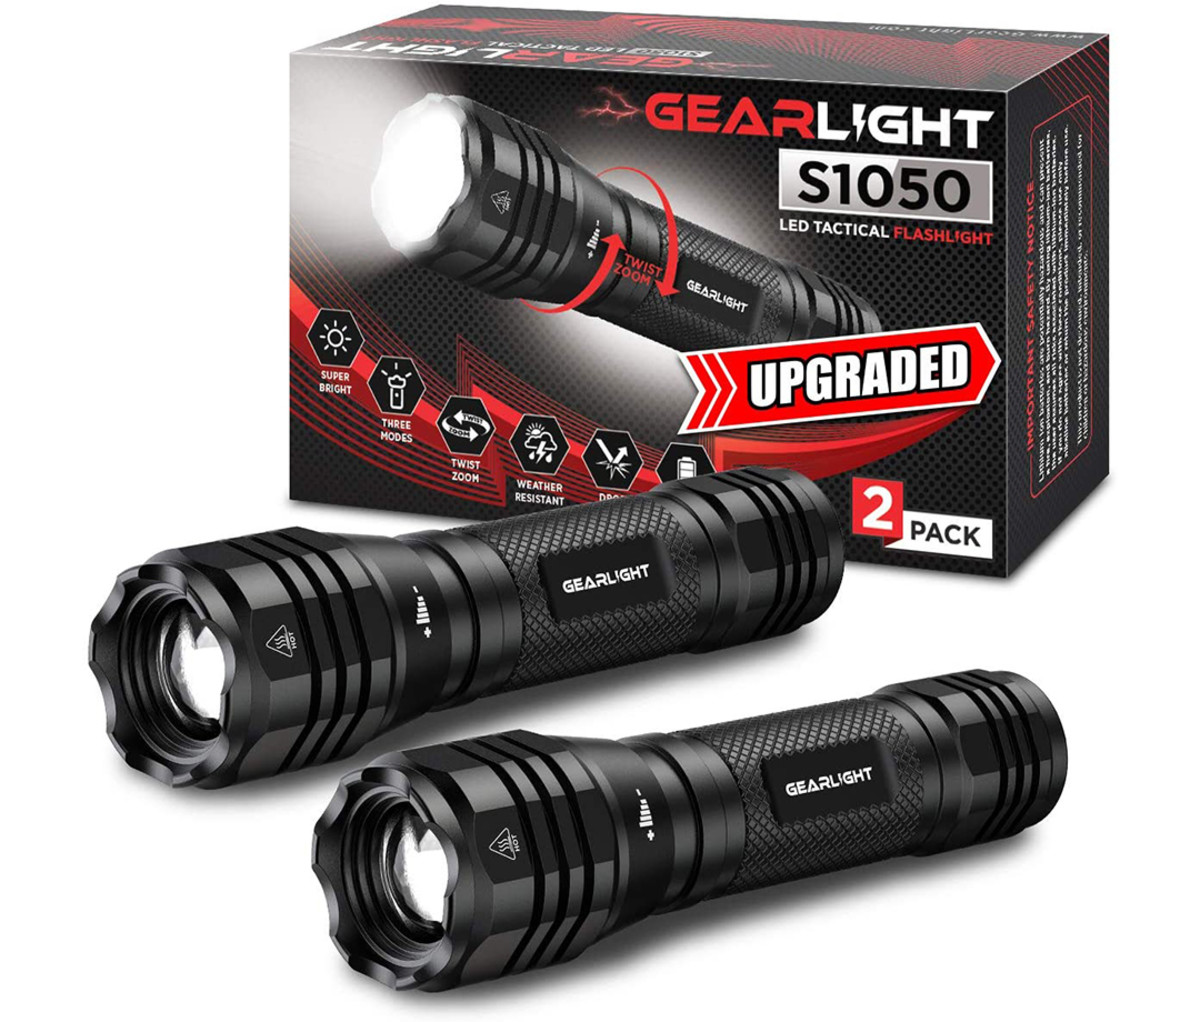 GearLight S1050 LED Flashlight Pack